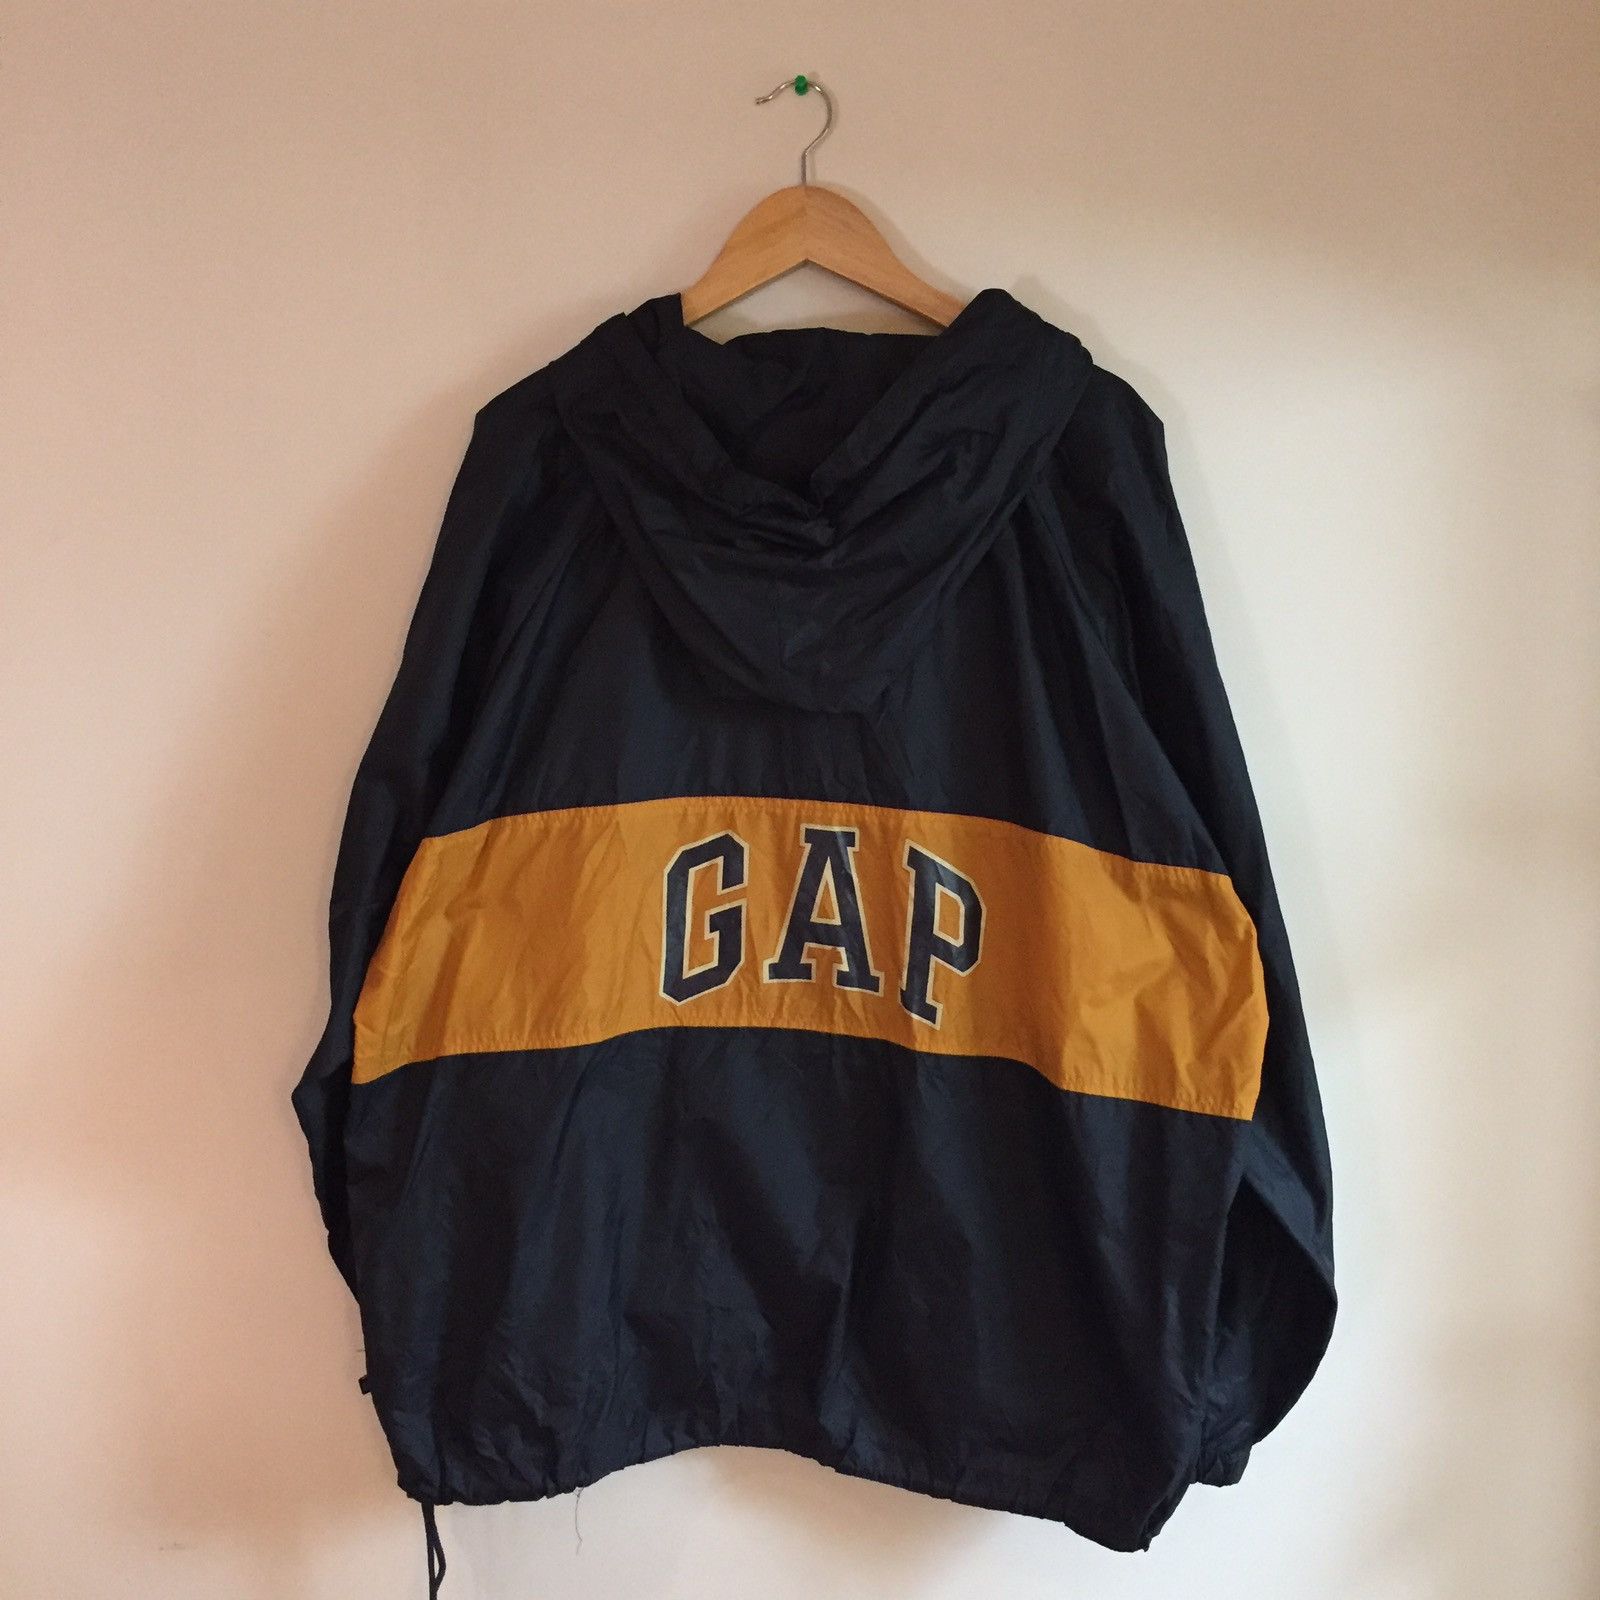 Gap Vintage GAP Windbreaker Pullover Jacket Size US XL / EU 56 / 4 - 1 Preview